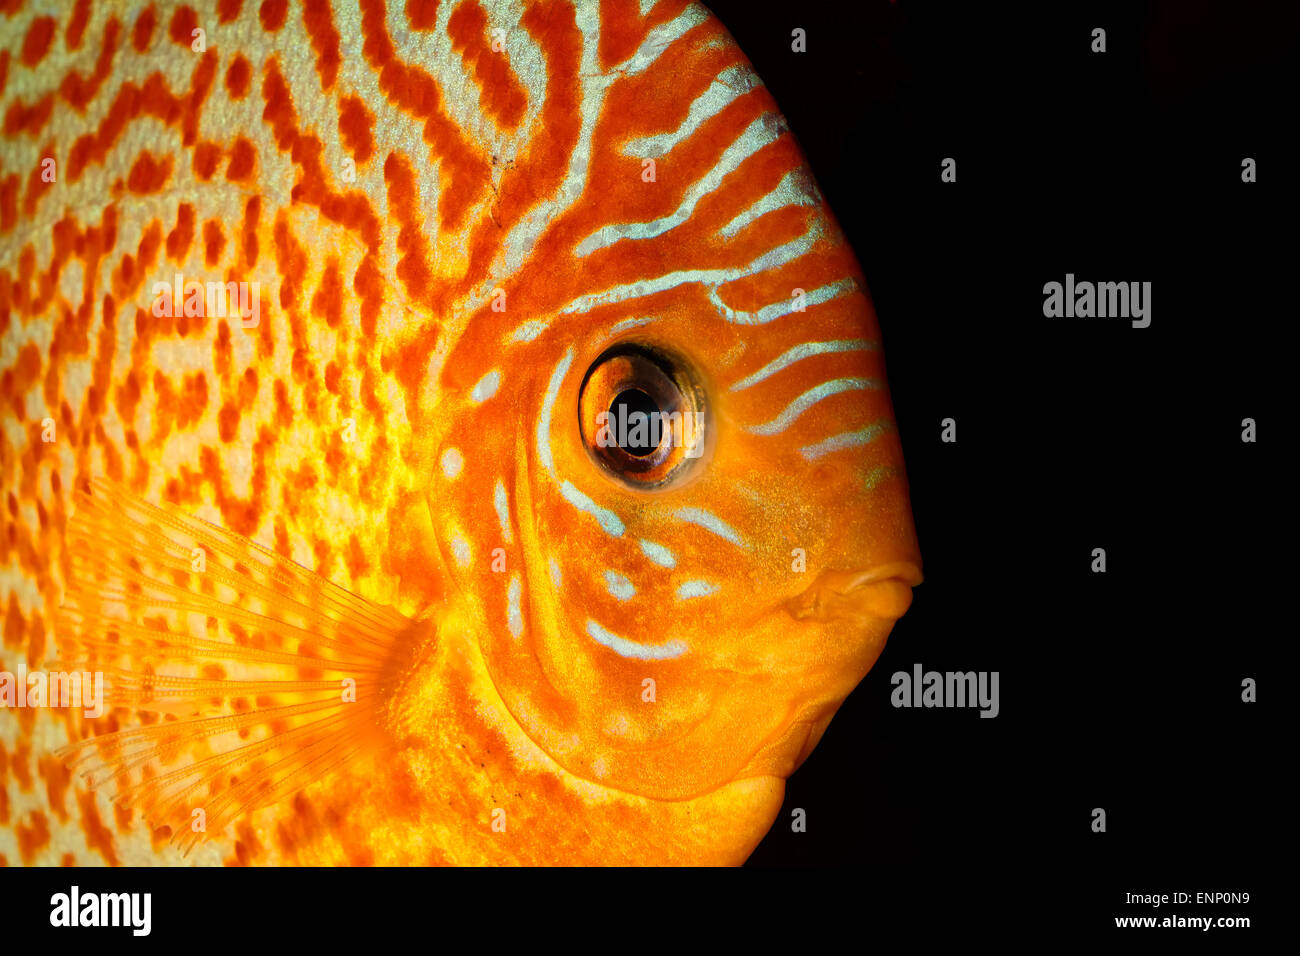 Detailed portrait of orange discus fish head. Stock Photo